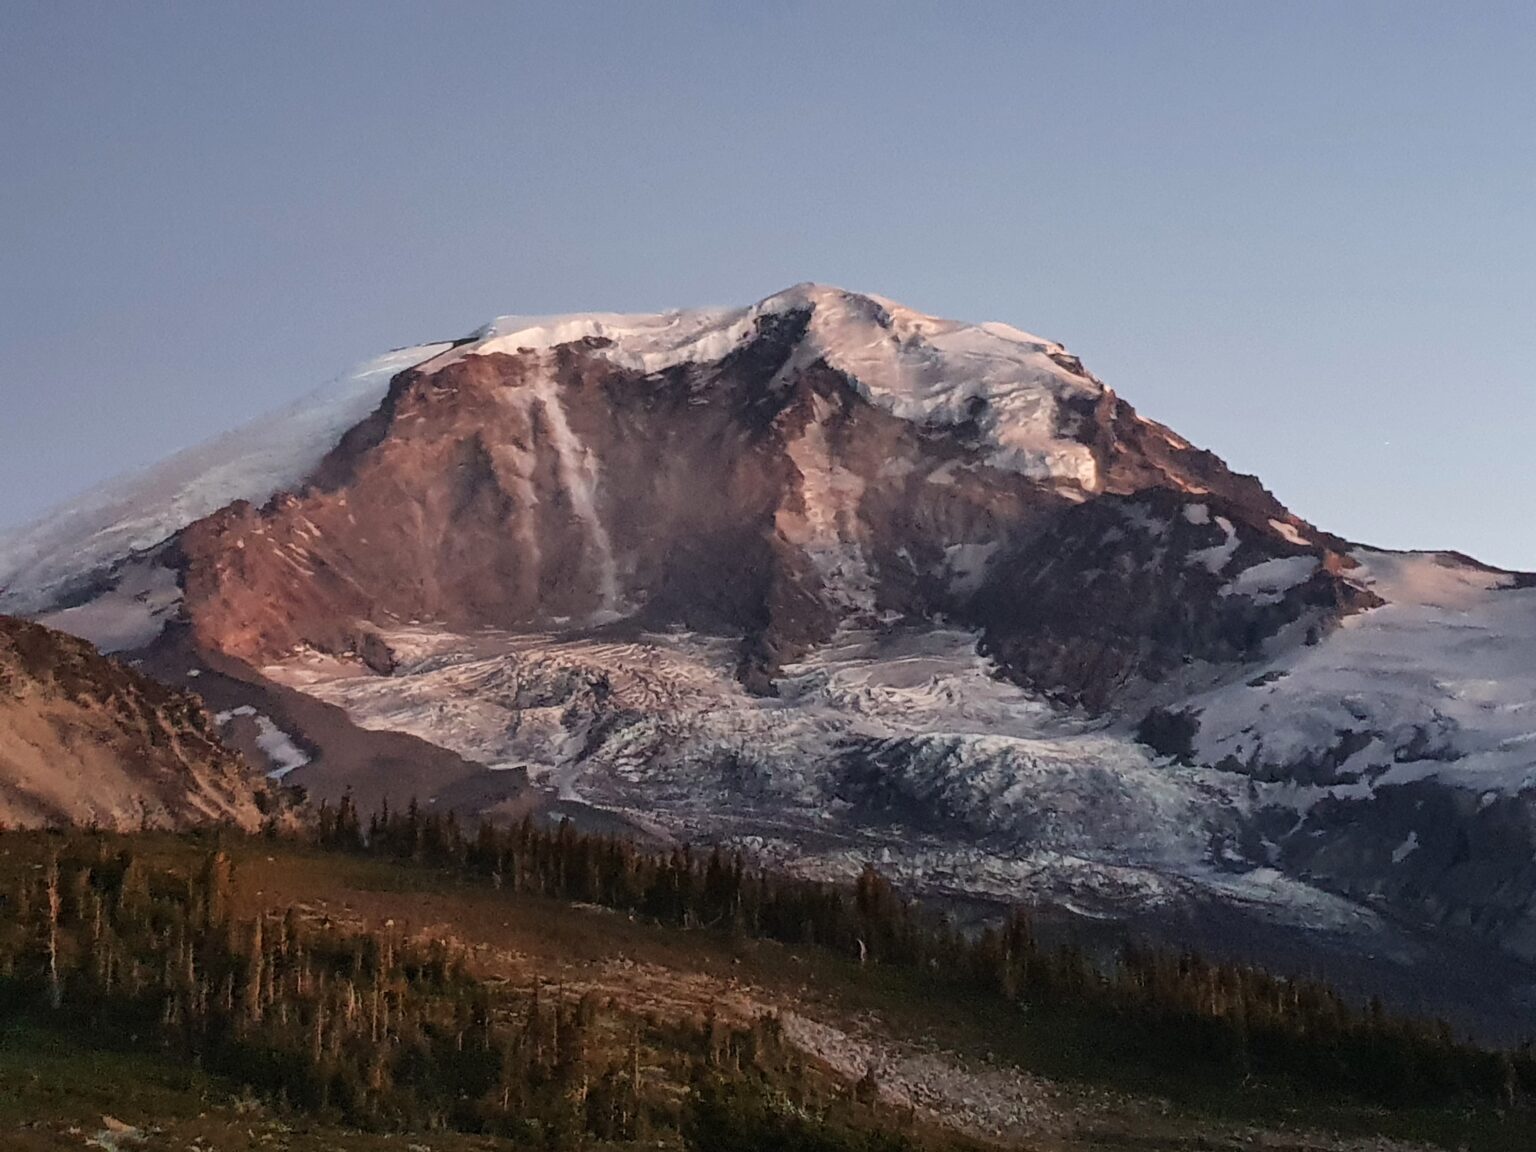 Final view of Mount Rainier at dusk